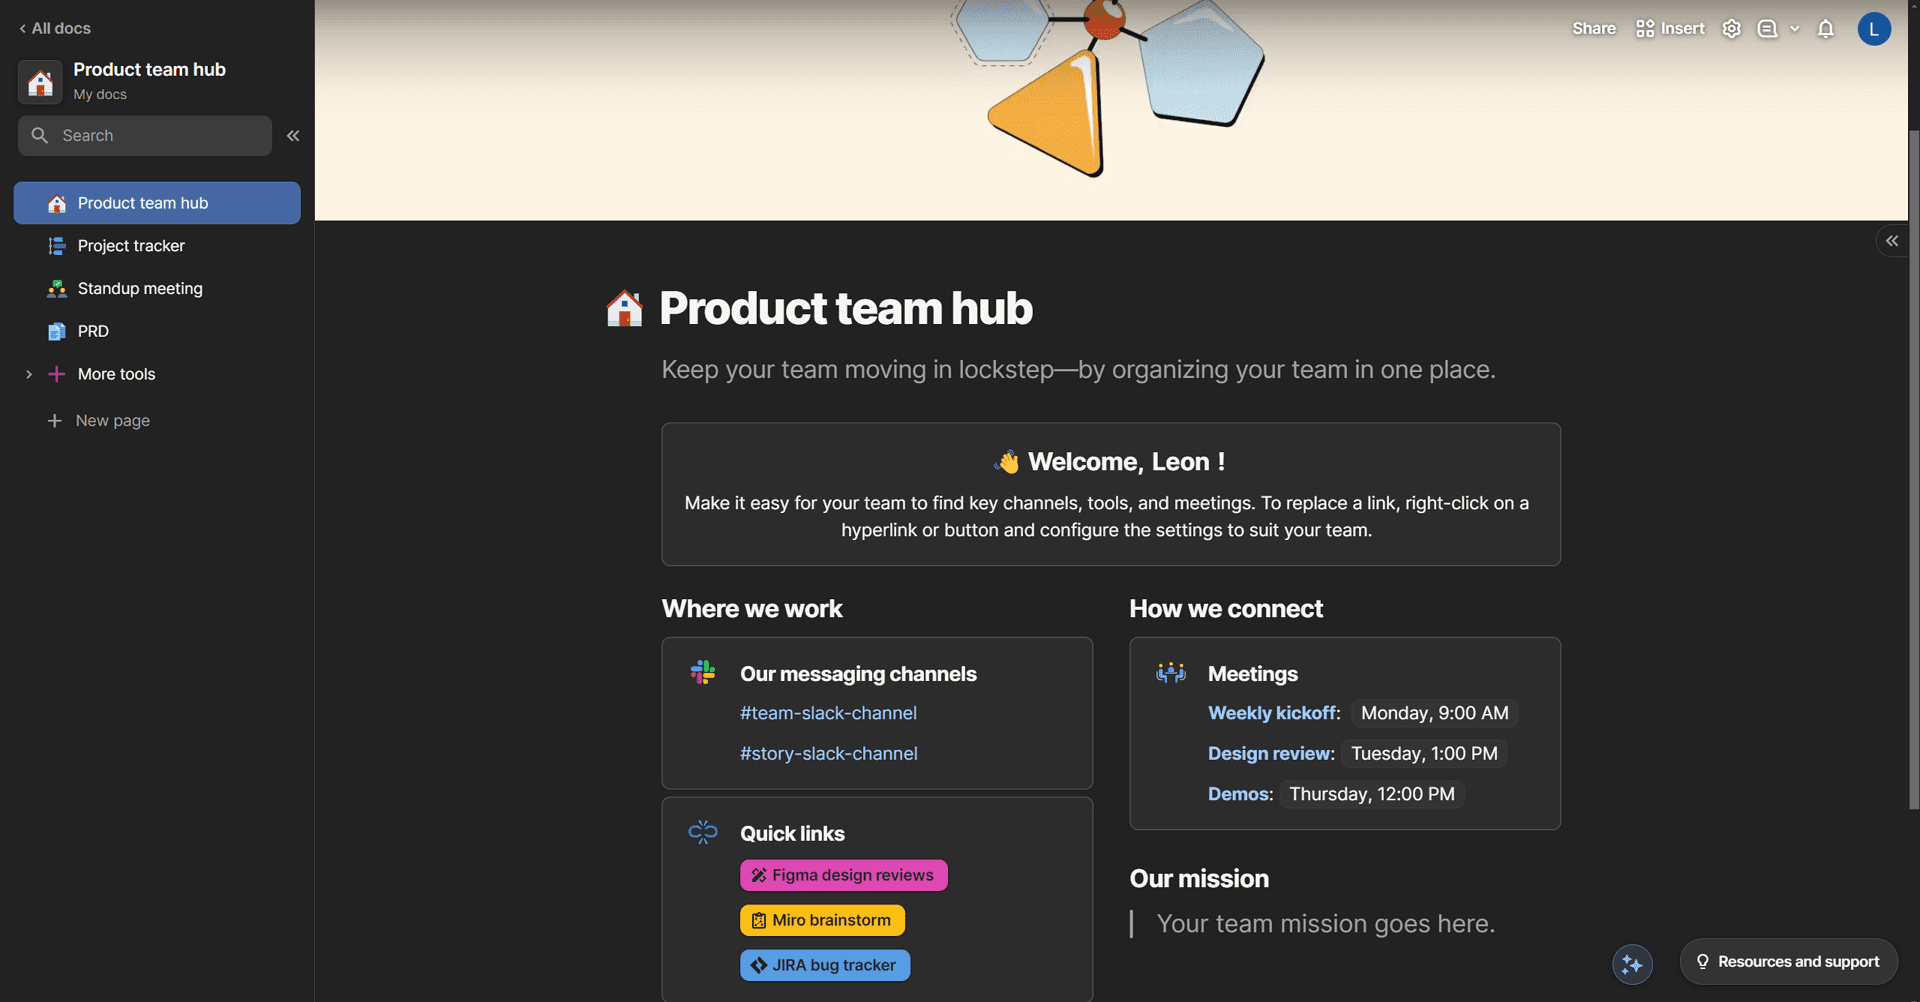 Coda Template - Product team hub